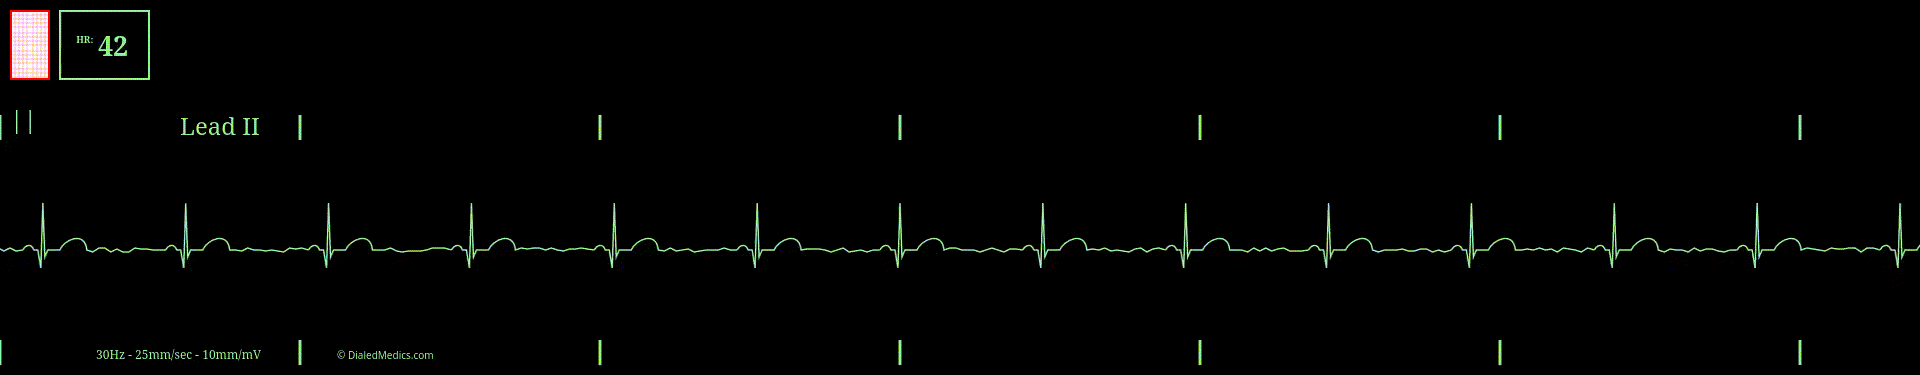 EKG monitor simulation of sinus bradycardia at a rate of 42bpm.